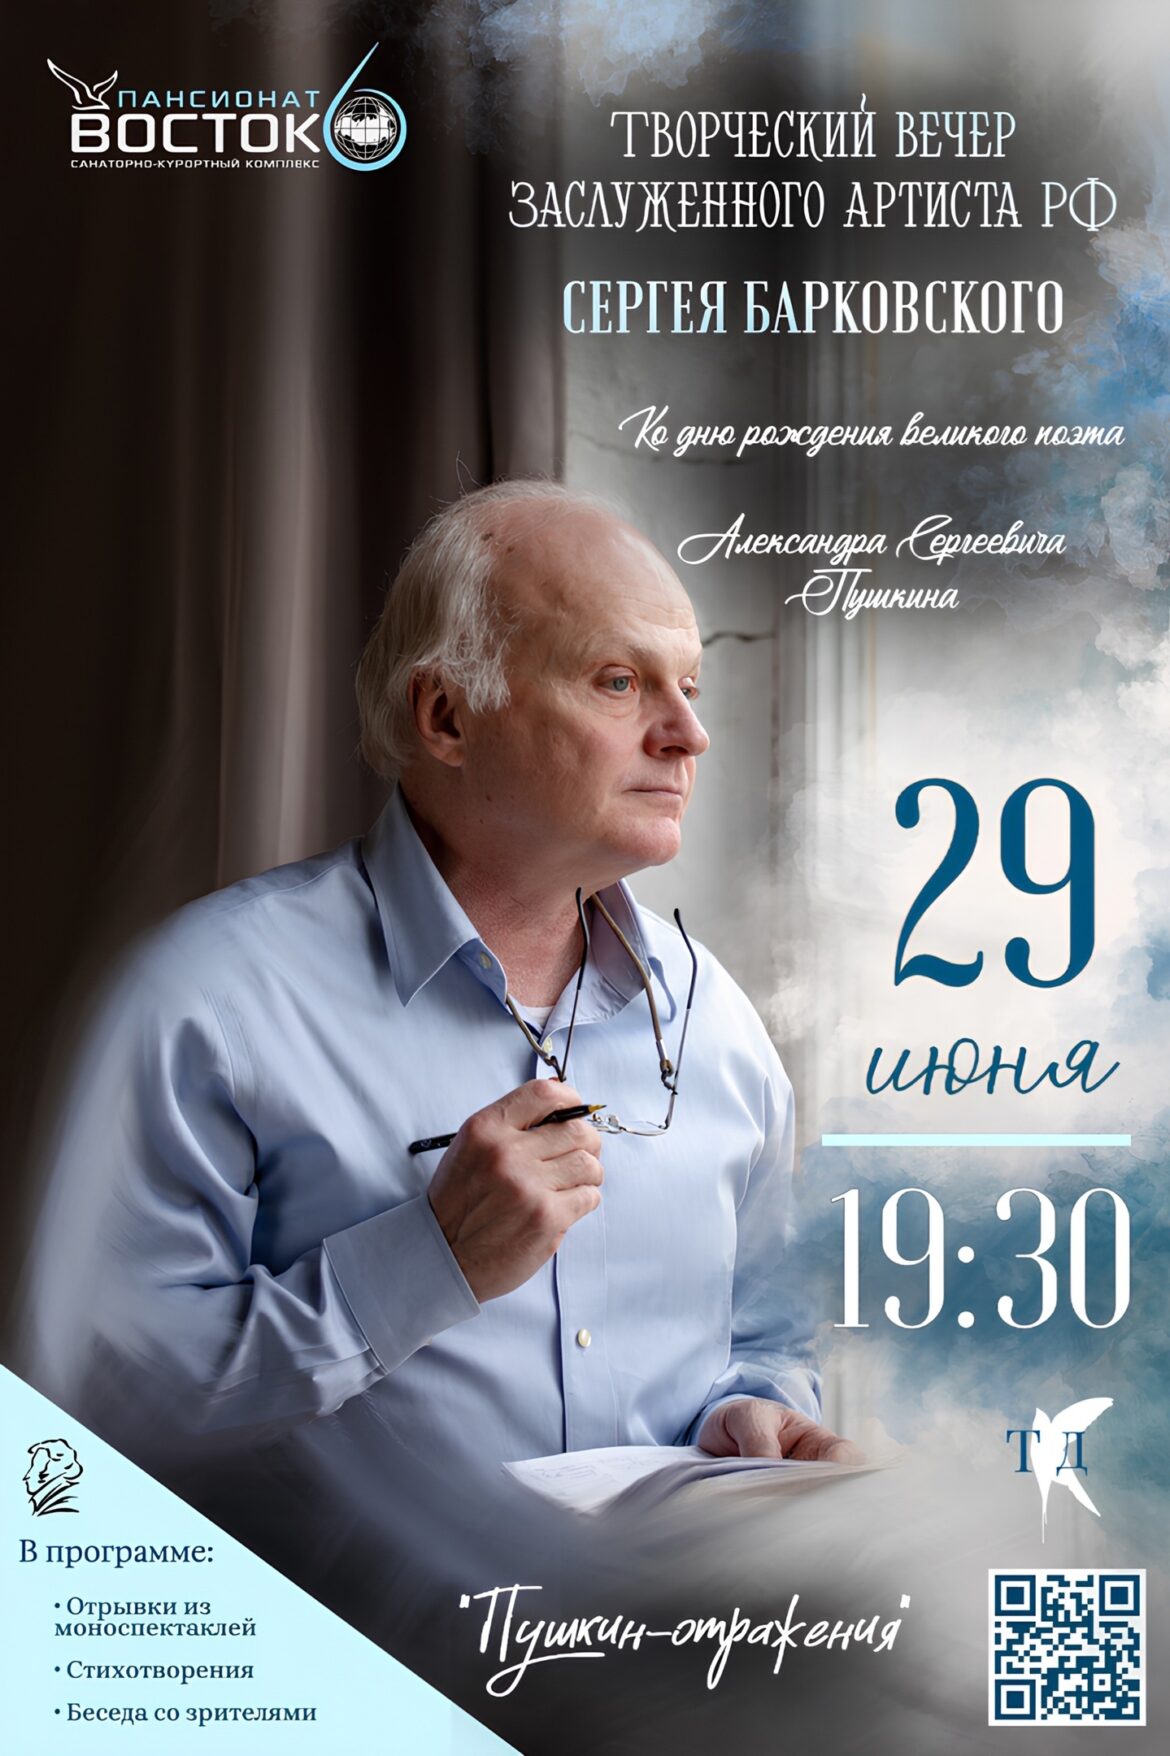 29 июня Творческий вечер с участием Заслуженного артиста РФ Сергея Барковского